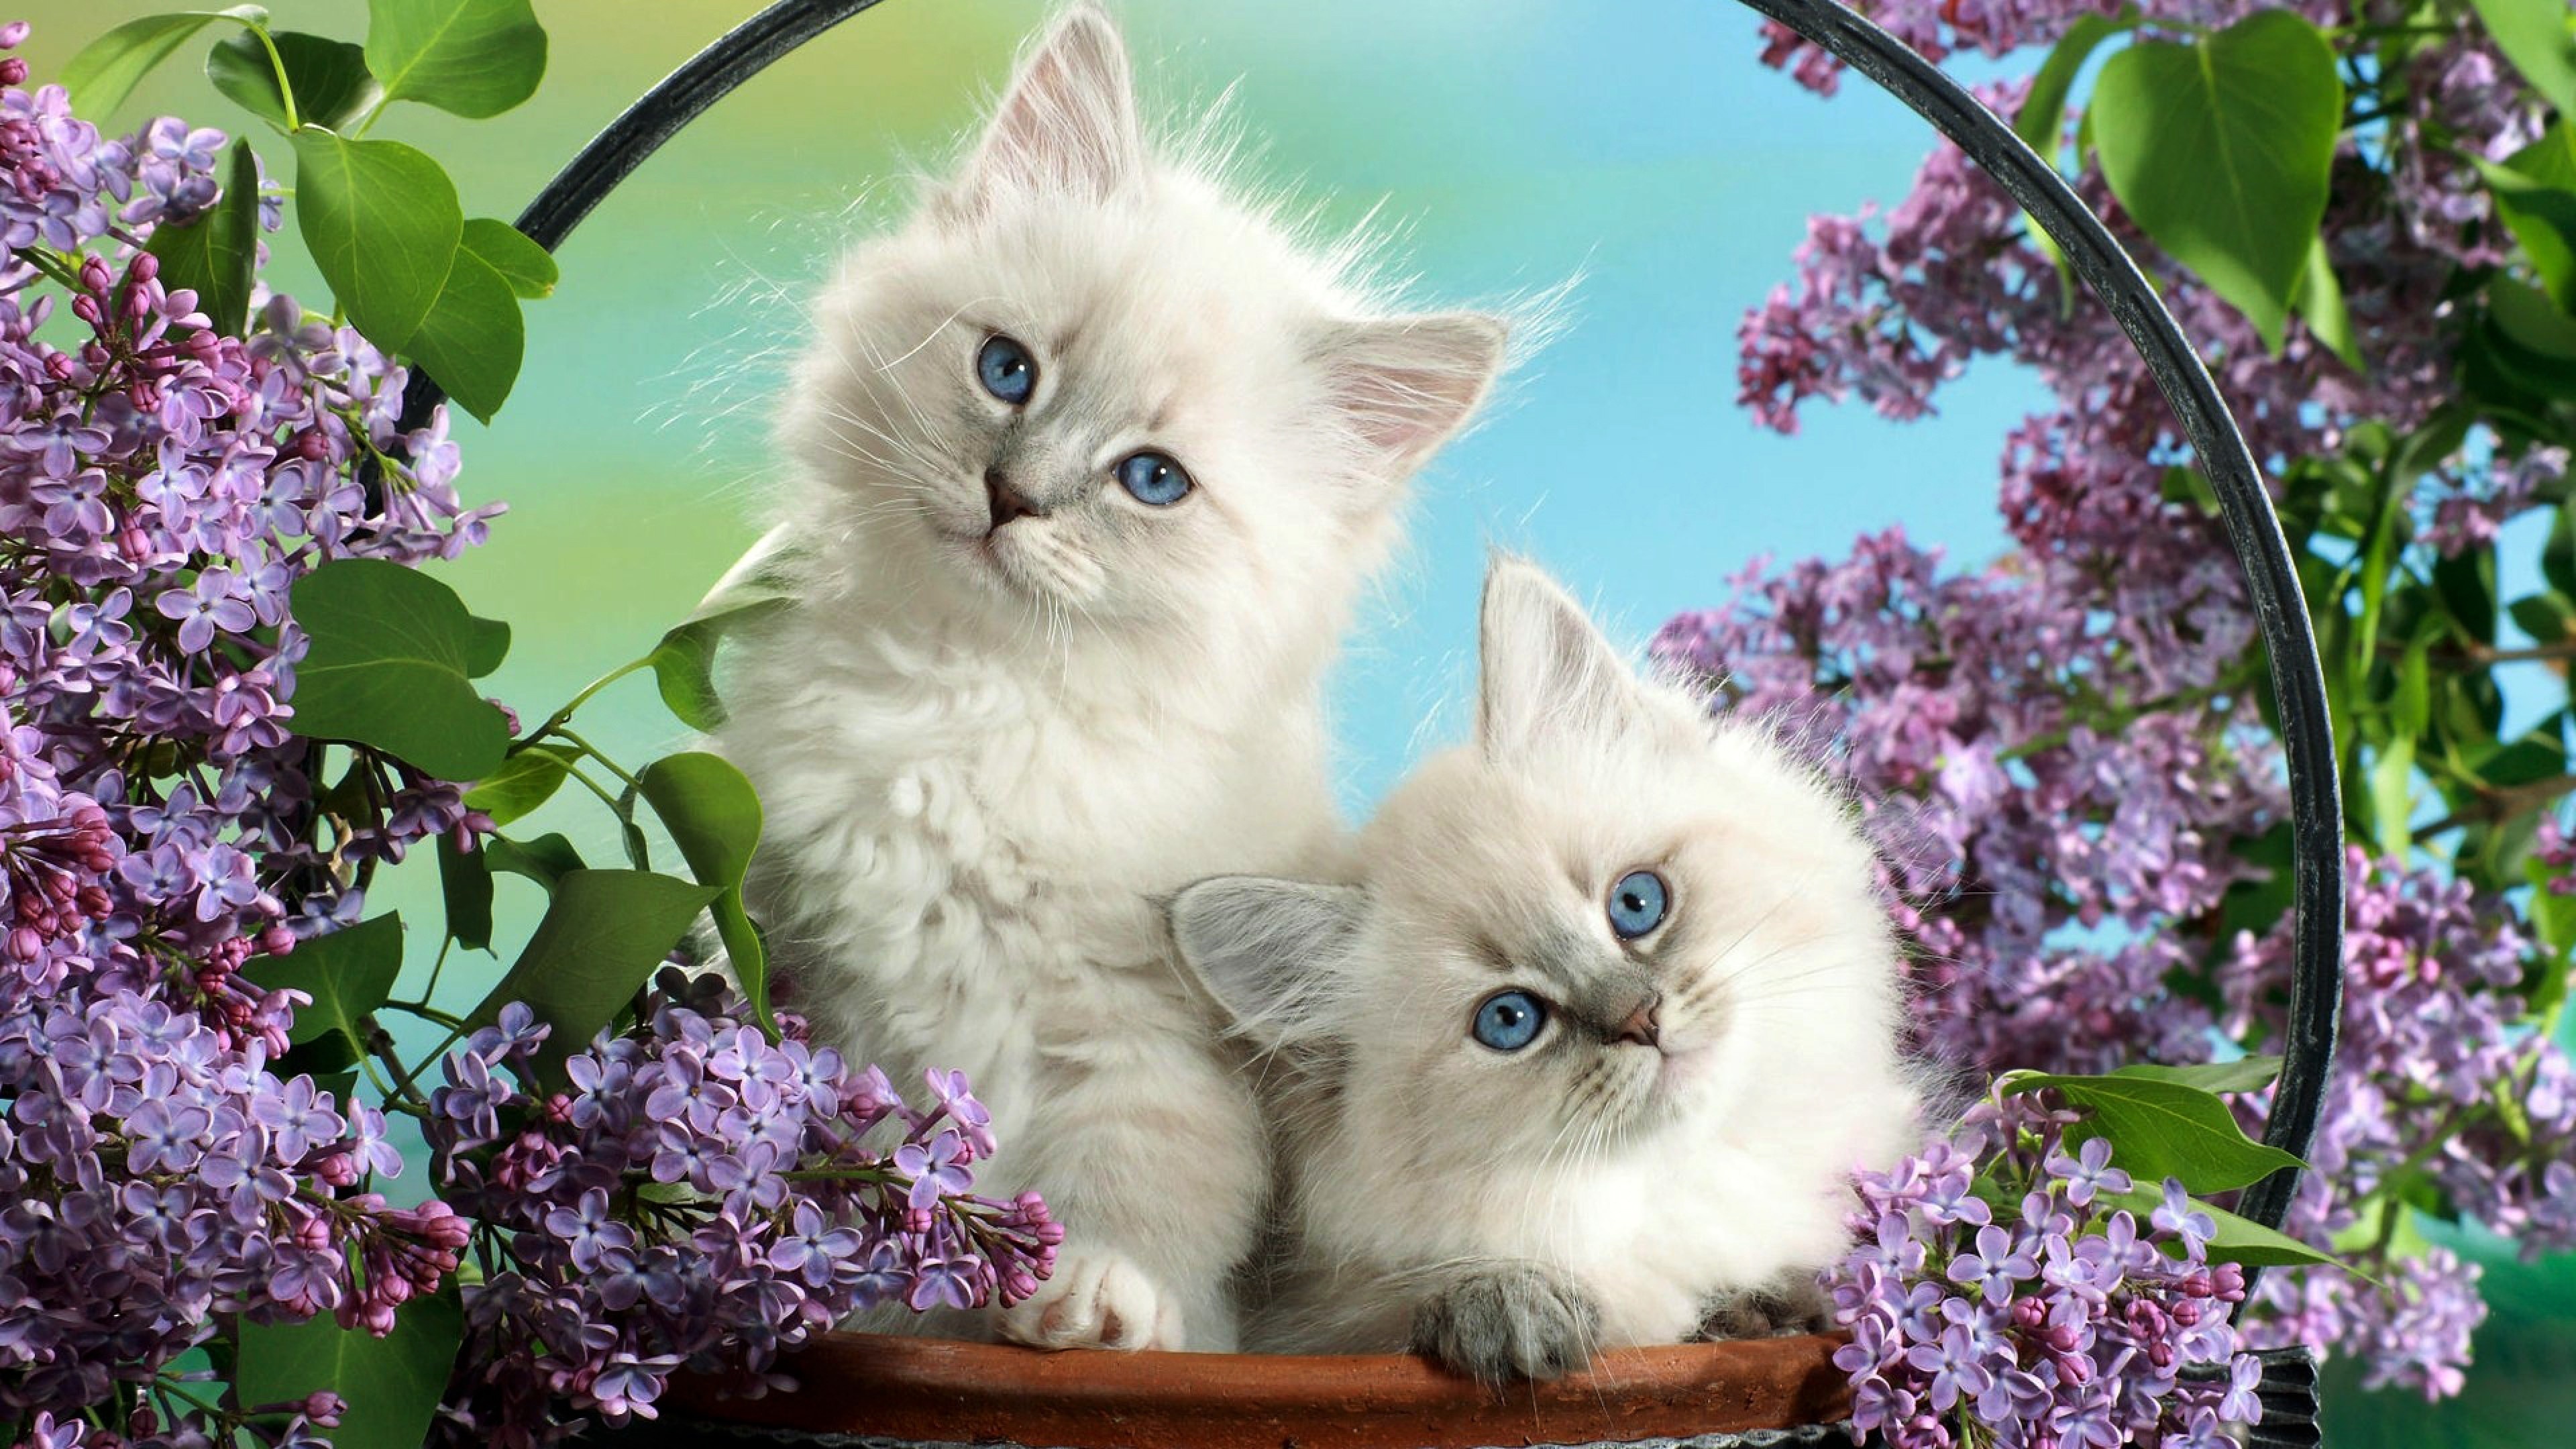 Ragdoll cat, High-definition wallpapers, Free image download, Desktop backgrounds, 3840x2160 4K Desktop